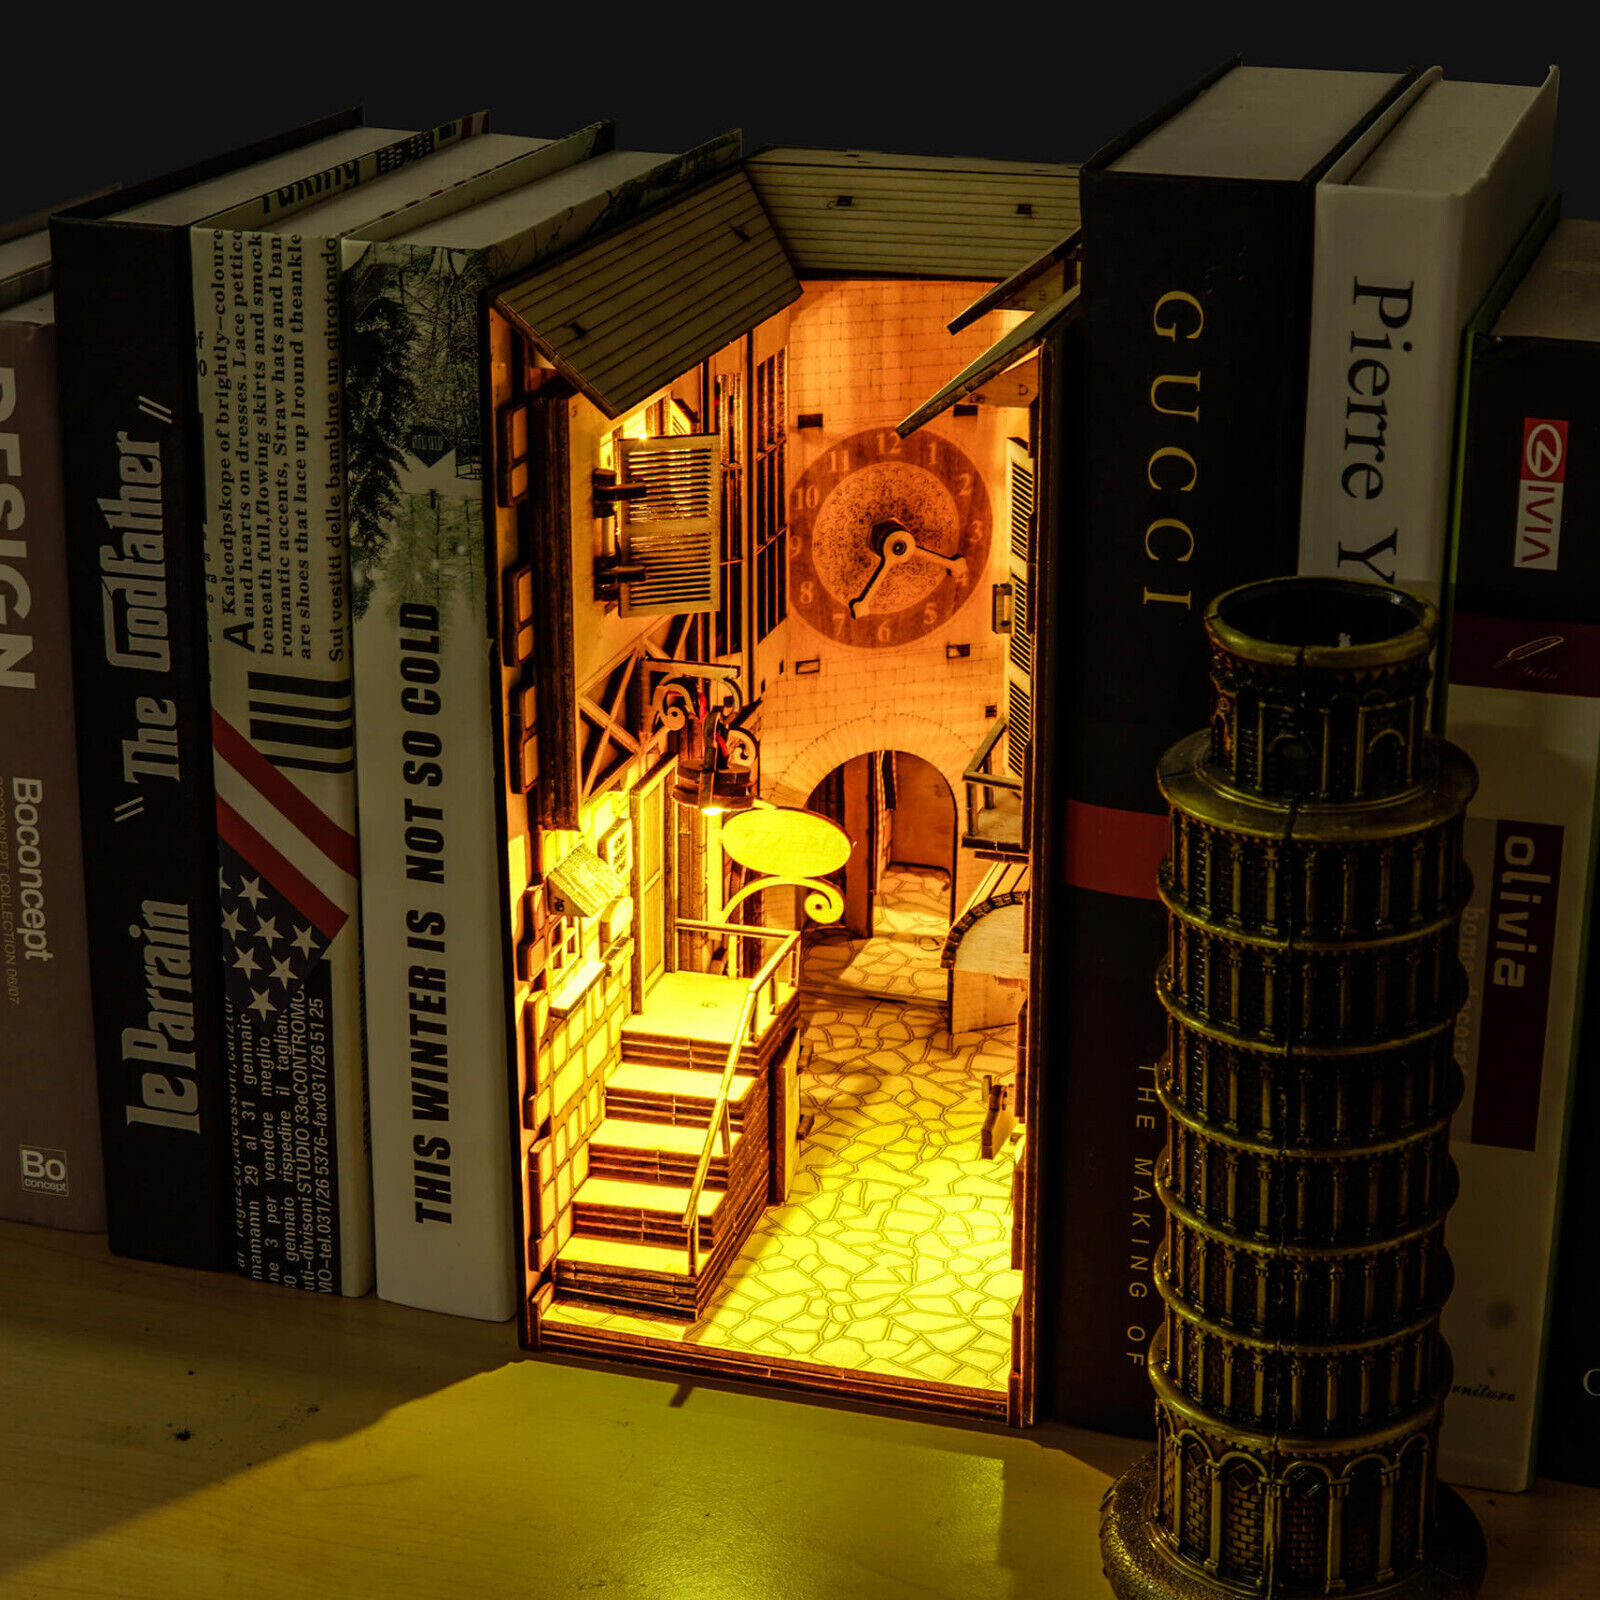 Roma's Midnight Alley Themed Book Nook - Book Shelf Decor - Home Decor - Diorama